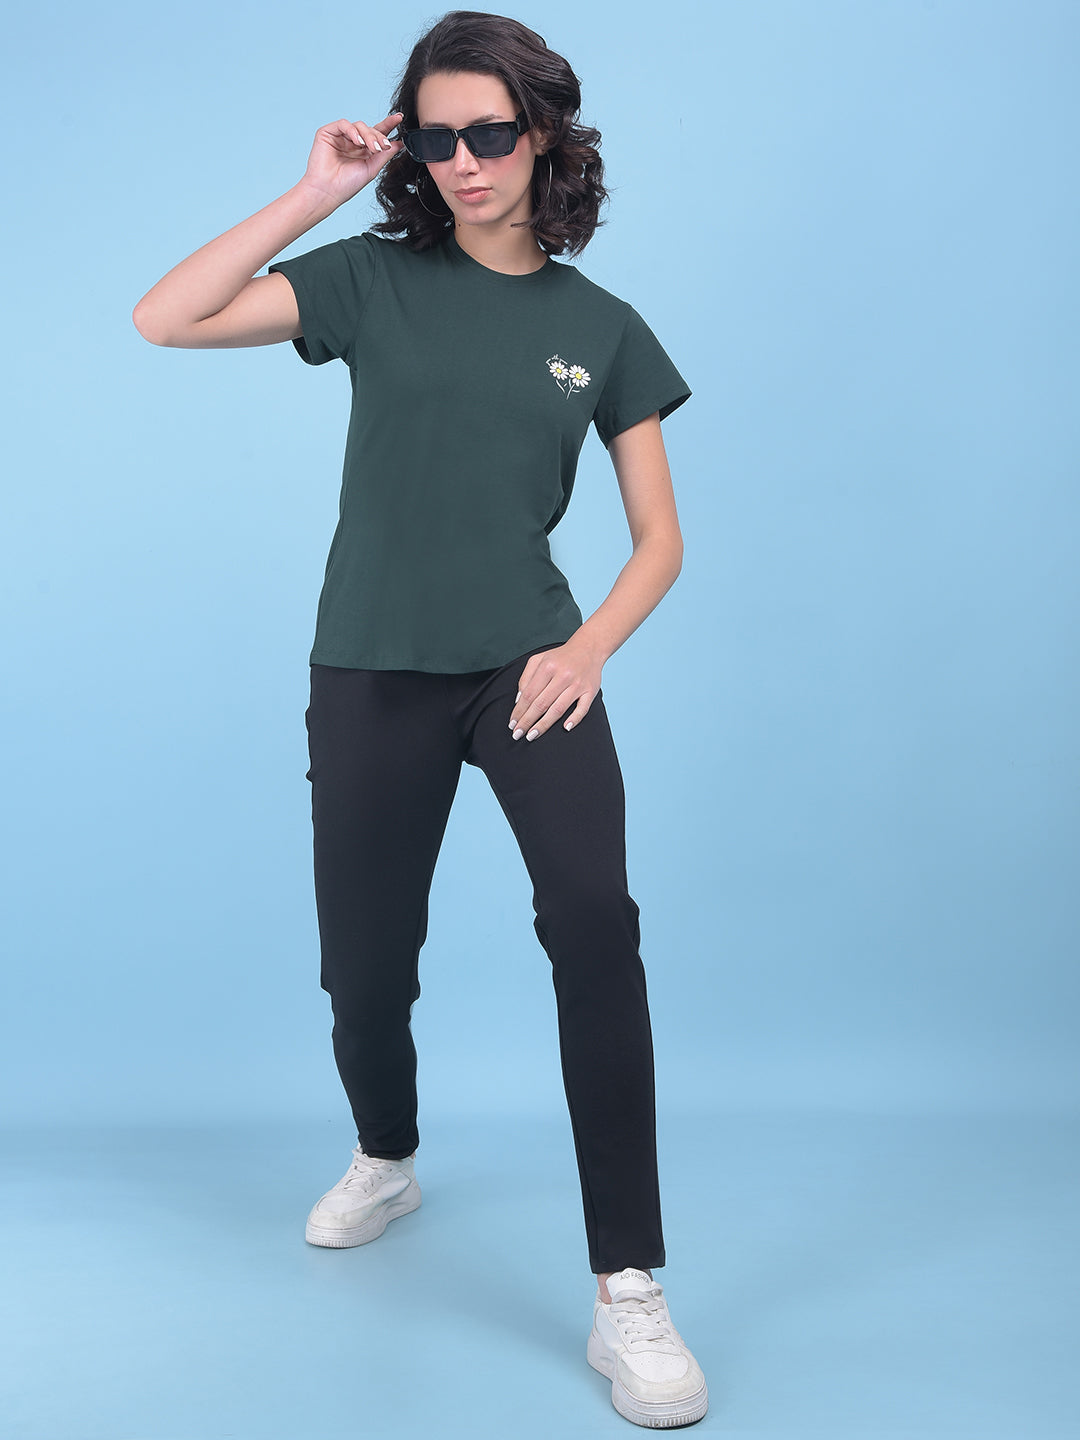 Green Floral Print Cotton T-Shirt-Women T-shirts-Crimsoune Club